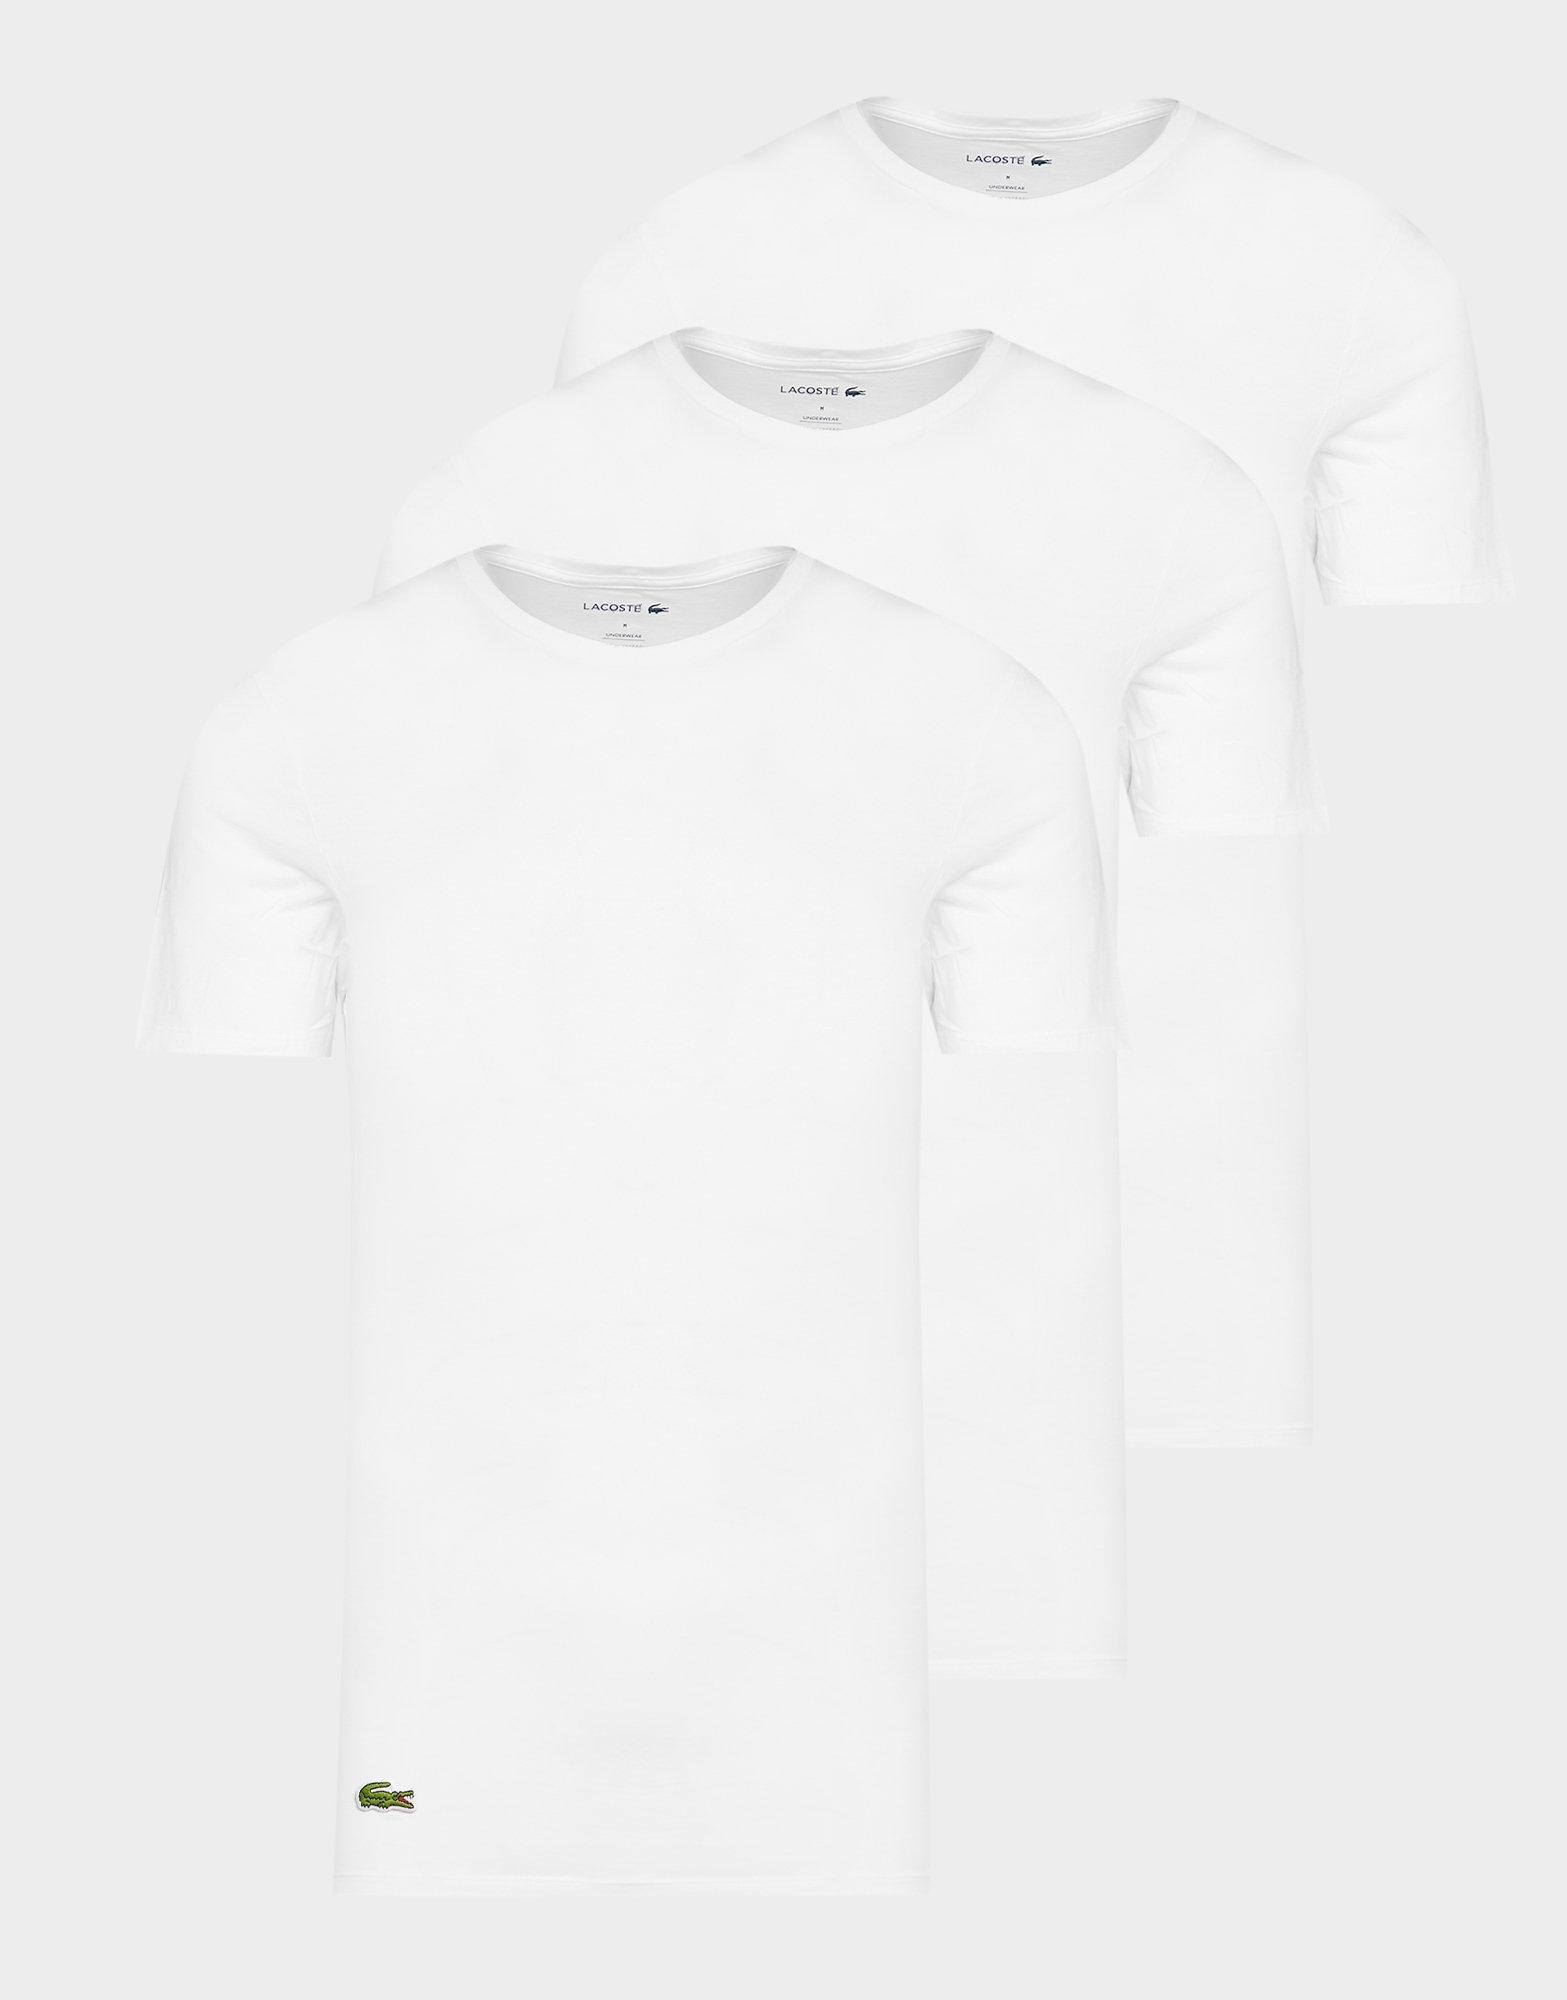 Kleding Jongenskleding Tops & T-shirts T-shirts T-shirts met print Gepersonaliseerde USA National Soccer Jersey Peuter T-Shirt 